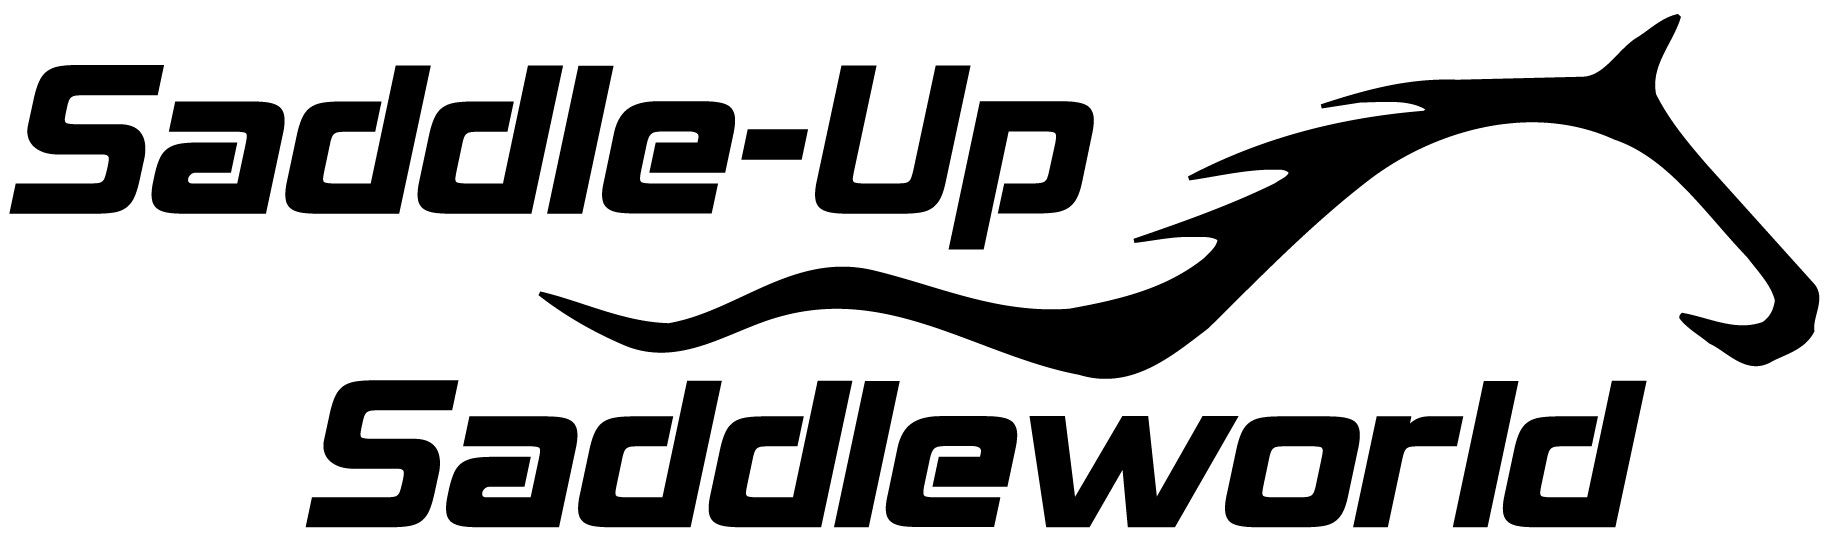 Saddle-Up SW Logo new jpg.jpg